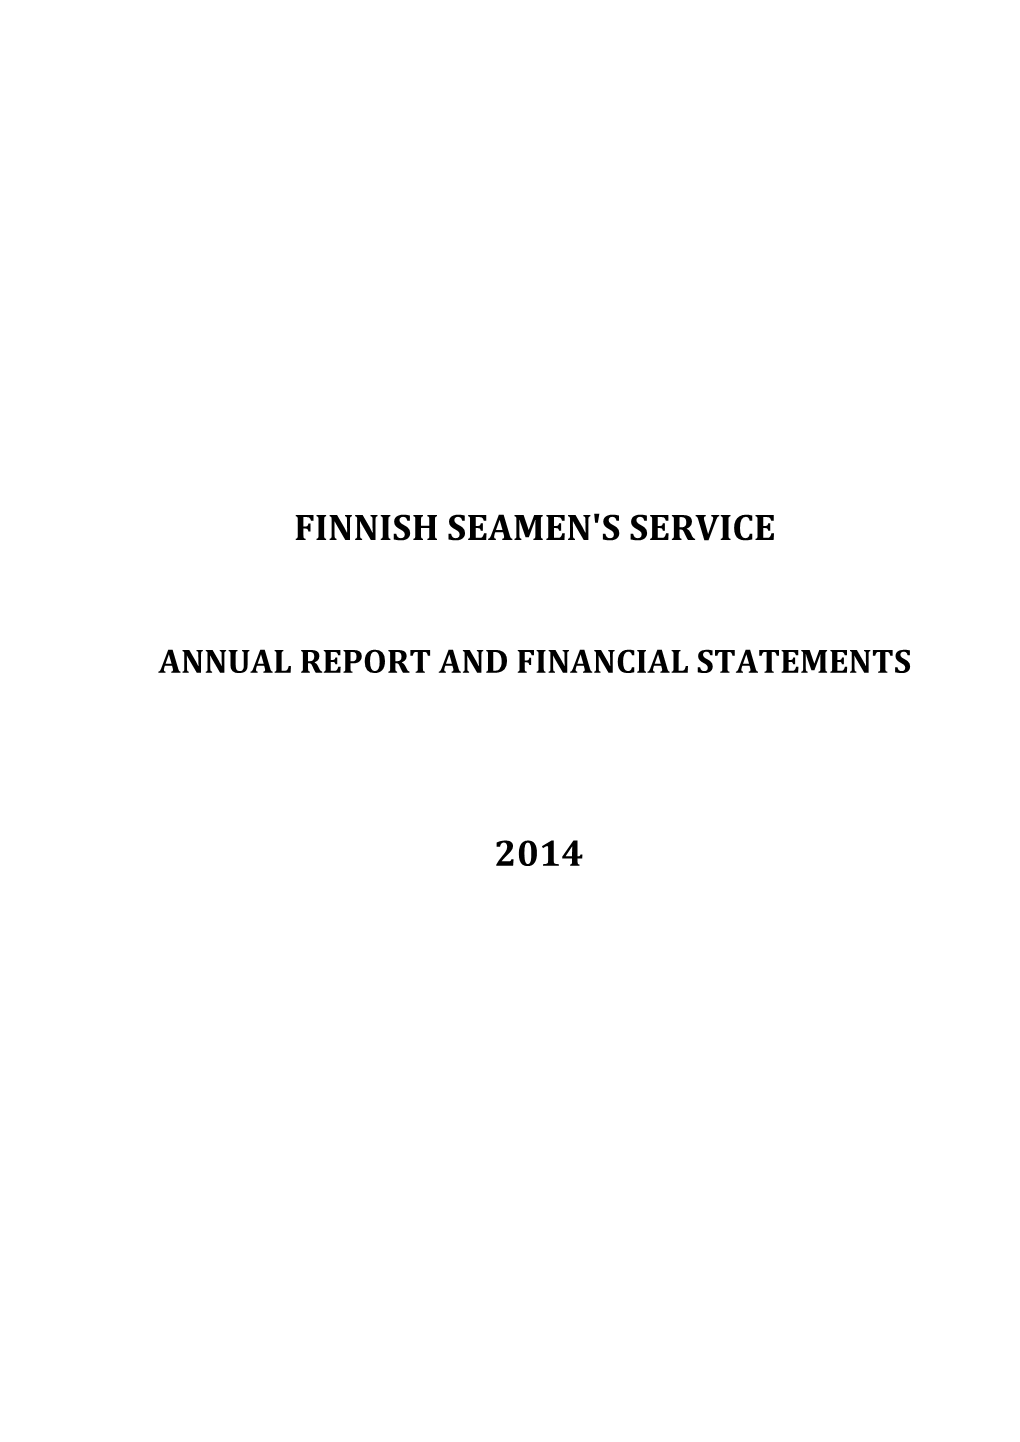 Finnish Seamen's Service 2014